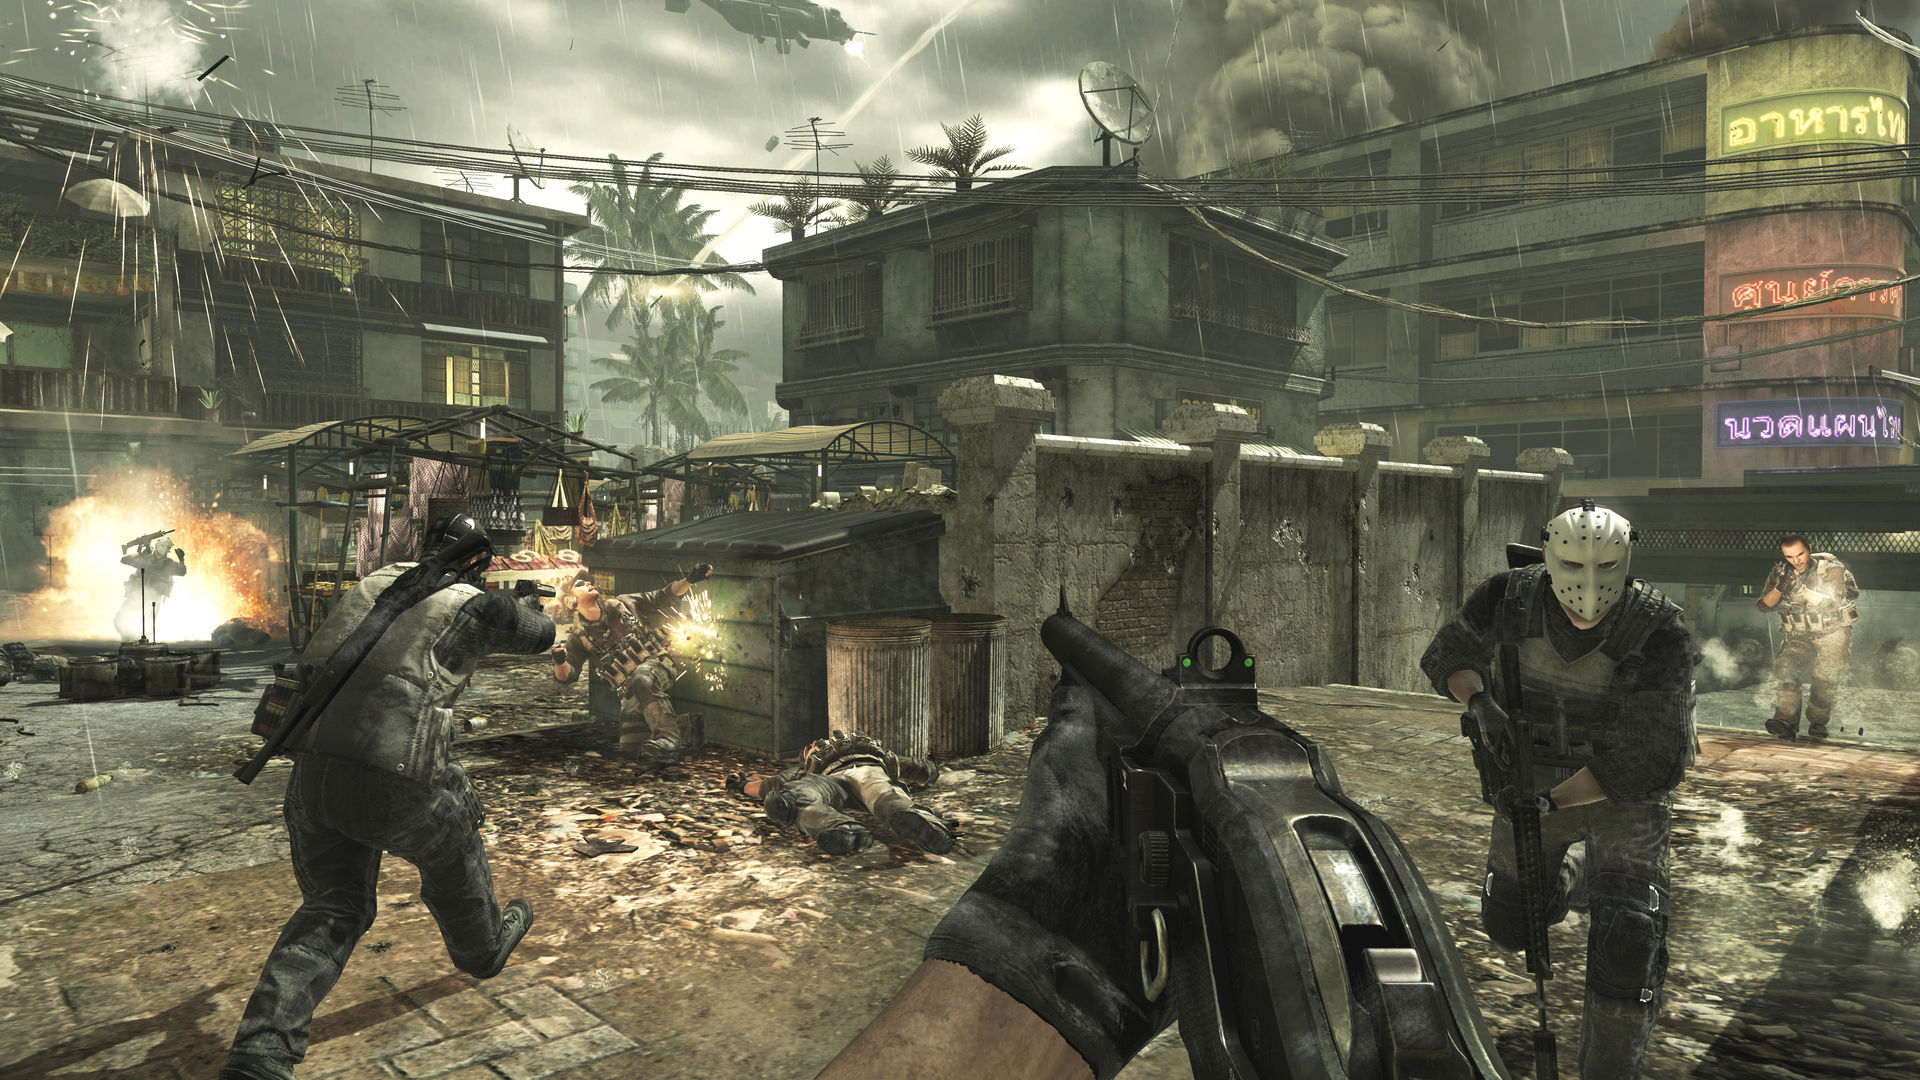 Save 50% on Call of Duty®: Modern Warfare® 3 (2011) on Steam